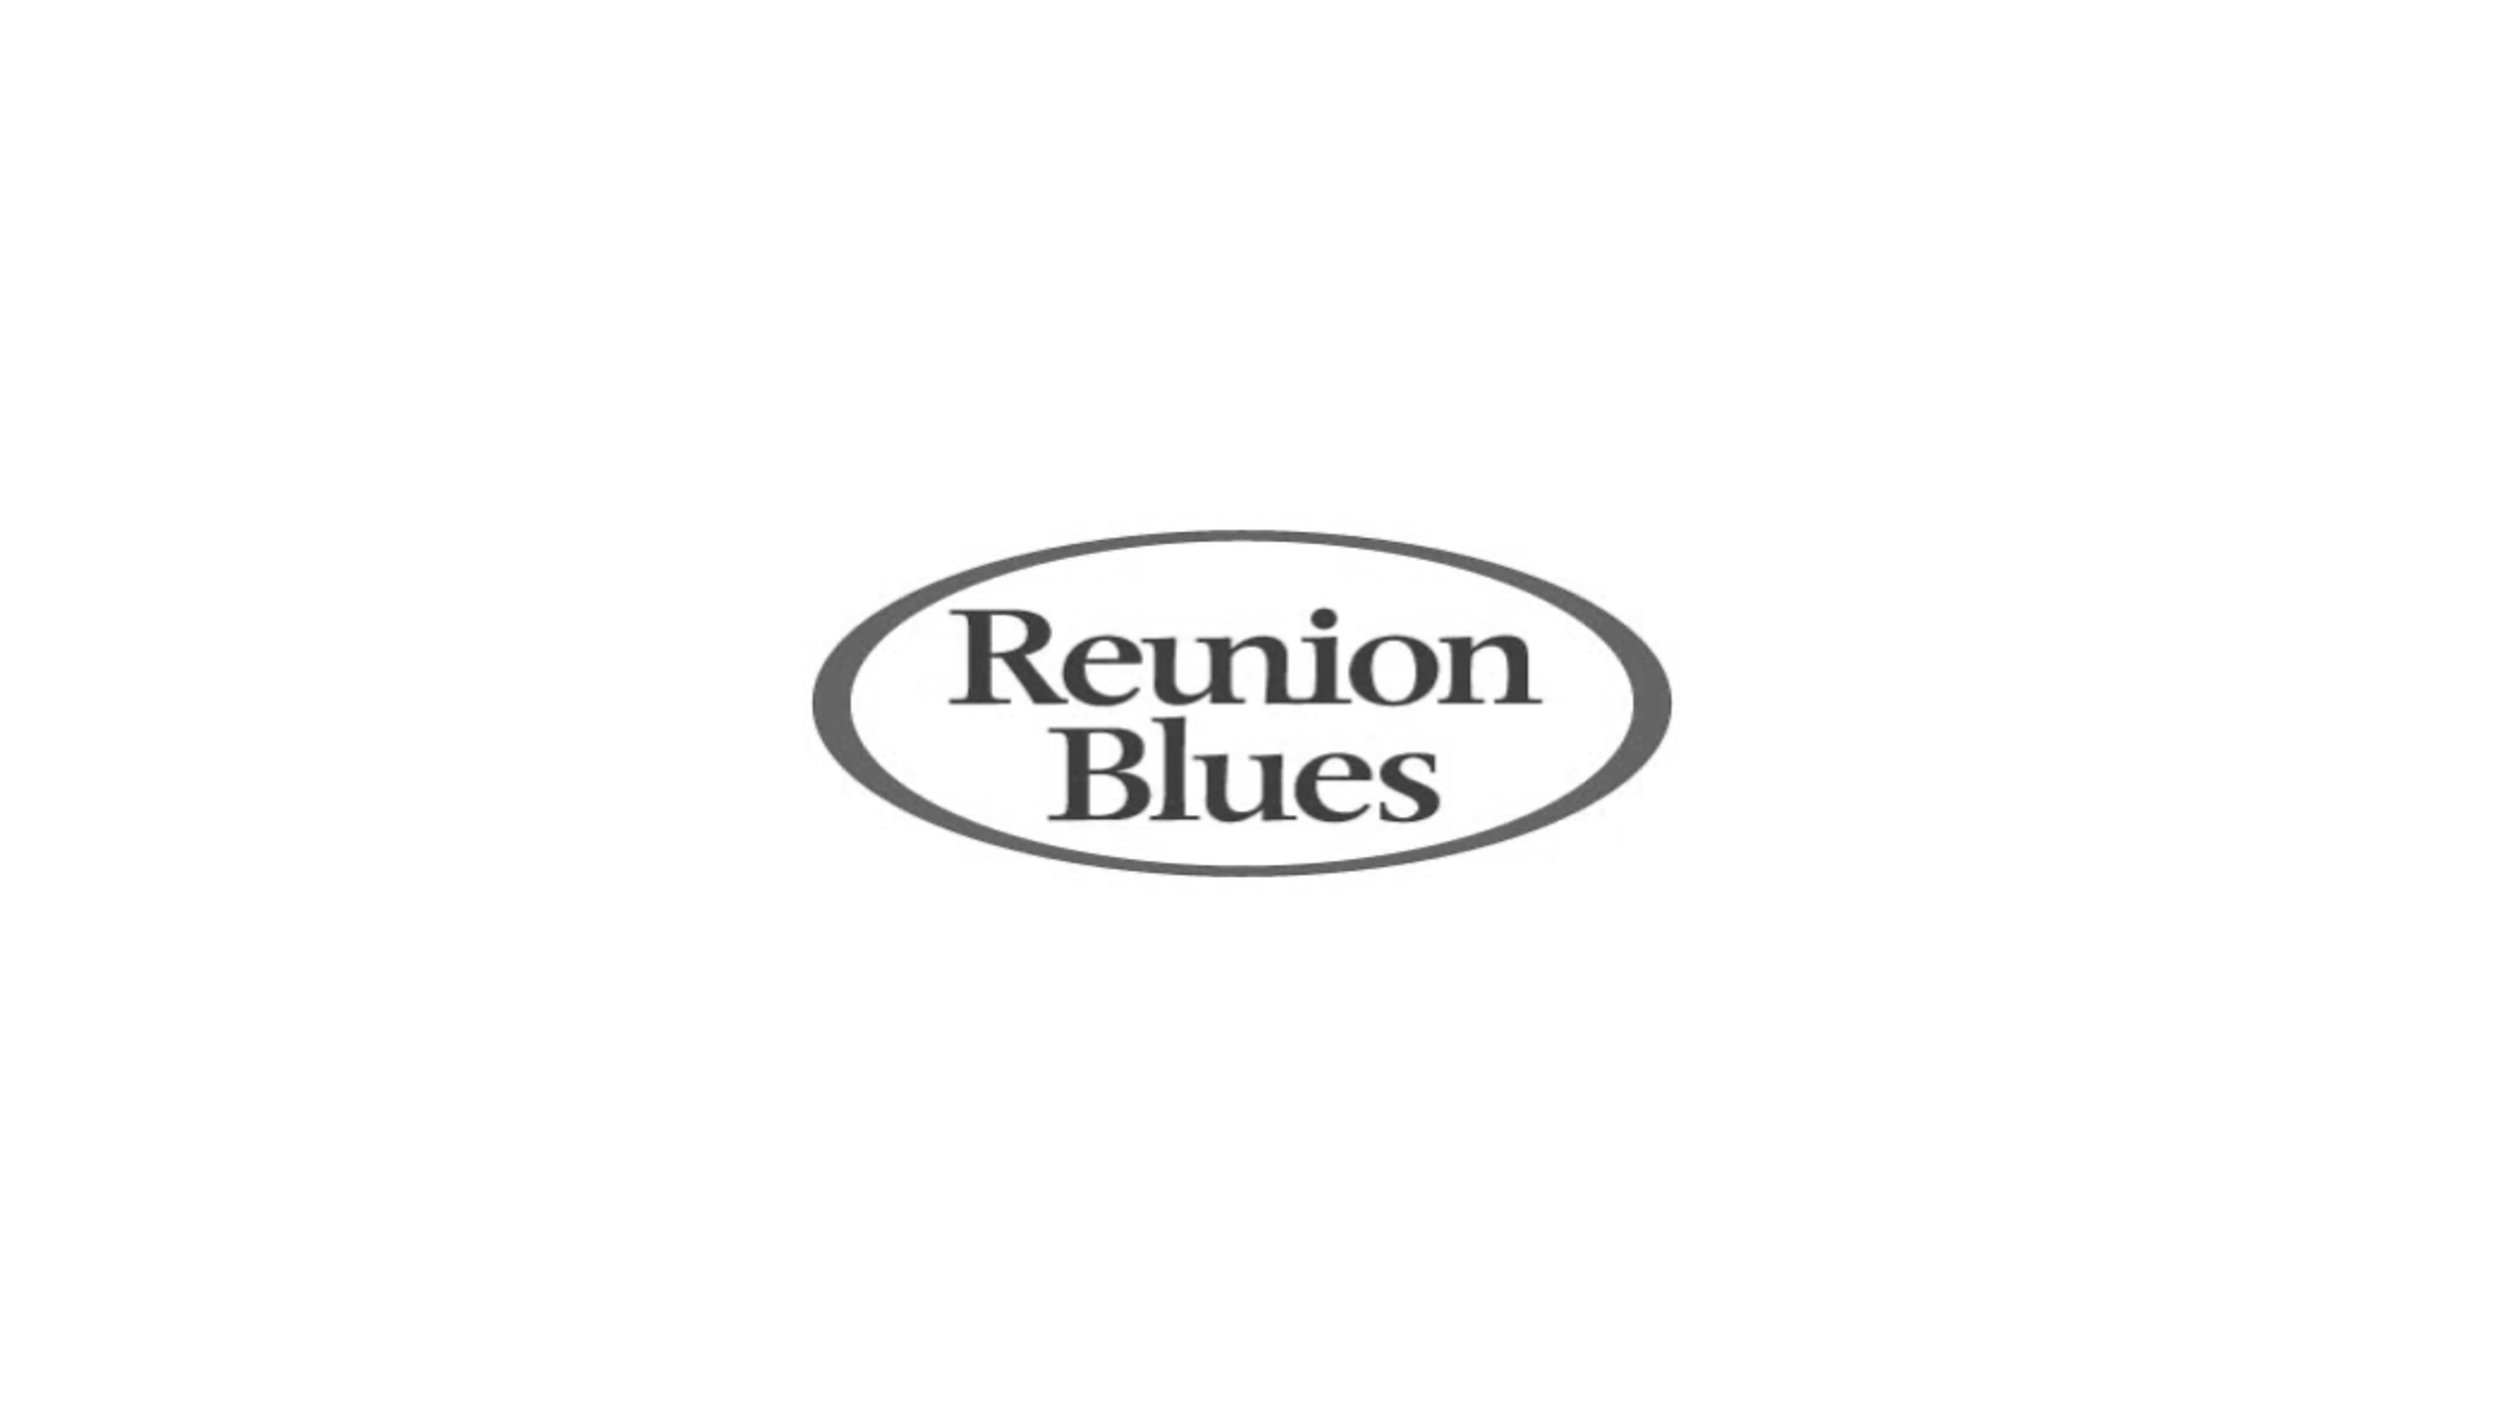 Reunion Blues Gig Bags